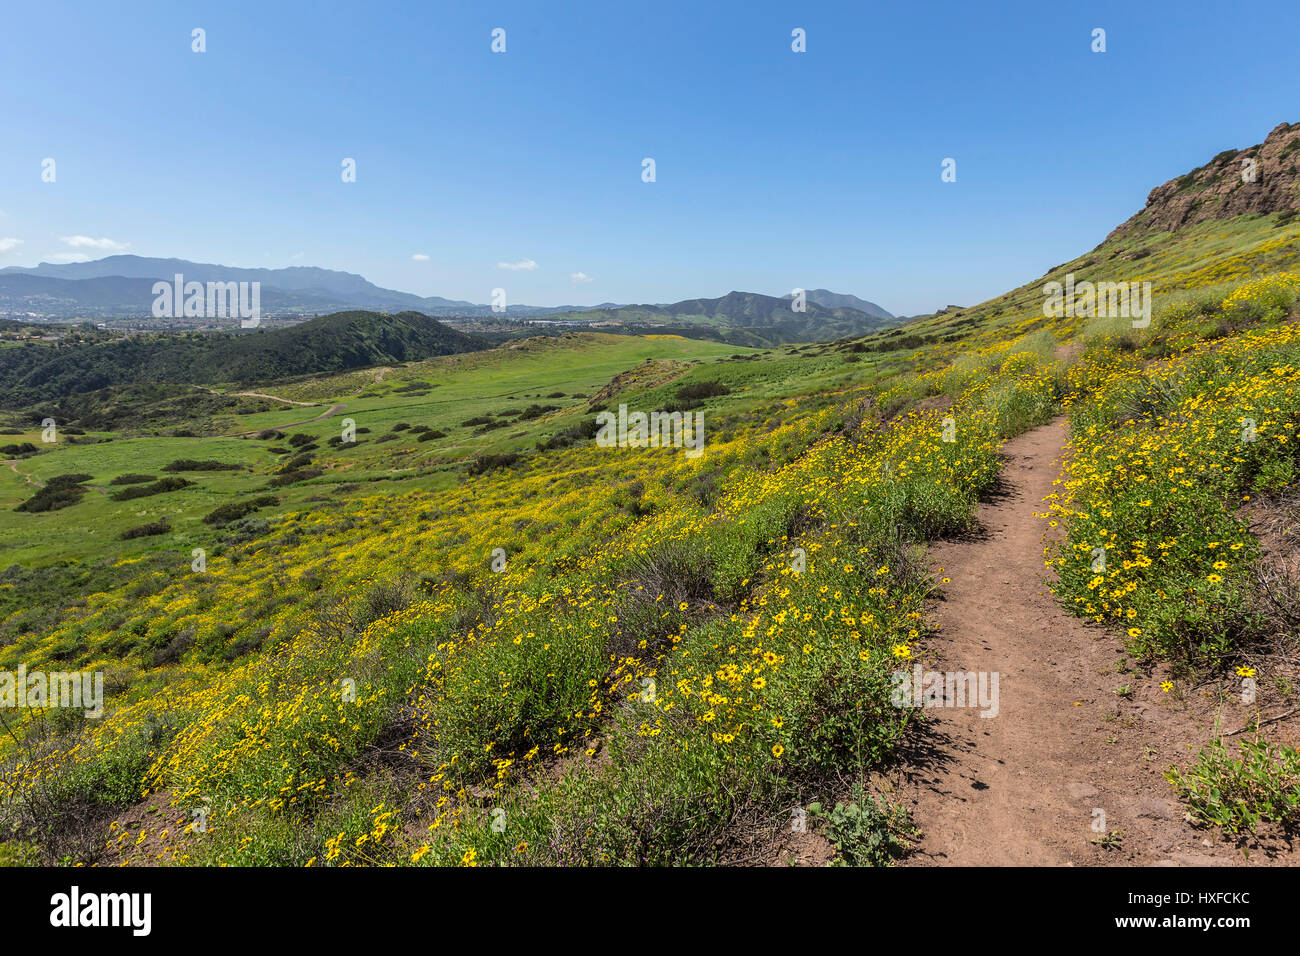 Verde collina vista di Wildwood Parco Regionale nella Contea di Ventura comunità di Thousand Oaks, California. Foto Stock